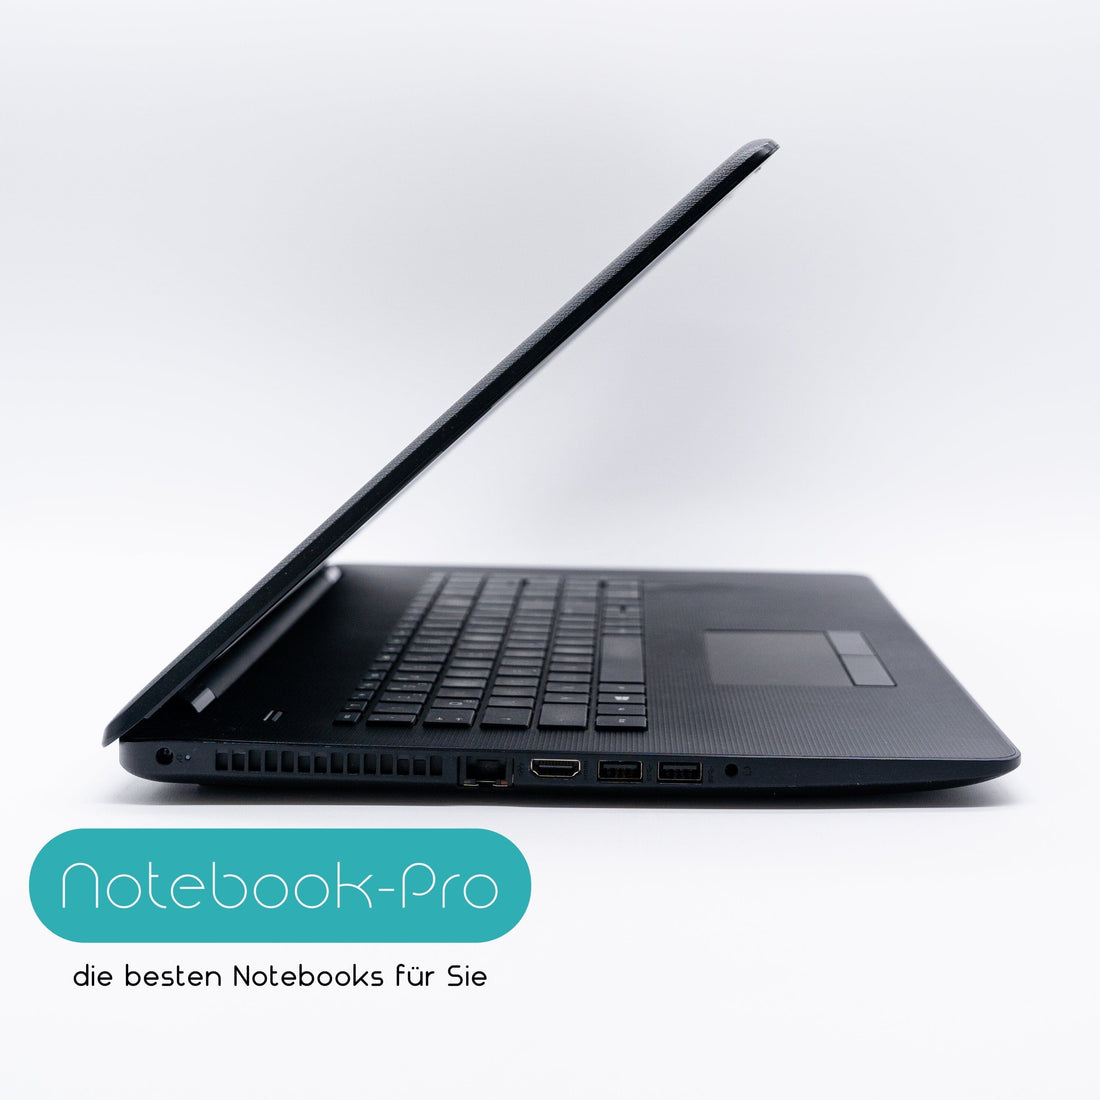 HP Notebook 17,3 Zoll HD+ Display Intel Core i7 DVD/RW-Laufwerk 256GB SSD Laptops Notebook-Pro 